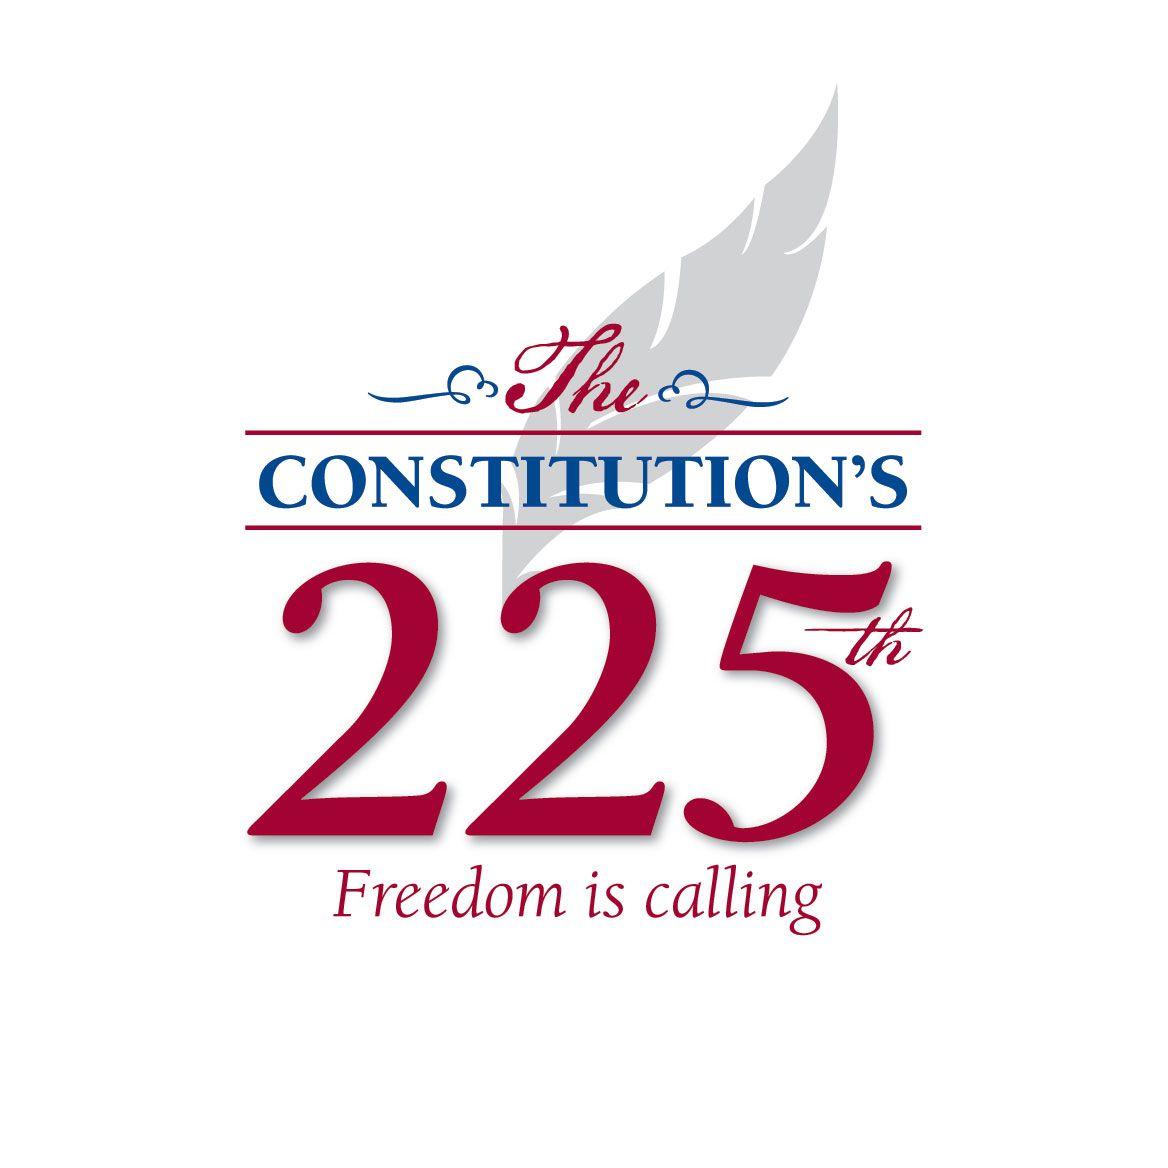 Constitution Logo - 225 Years of US Constitution | Anniversary Logos | Pinterest | Logos ...